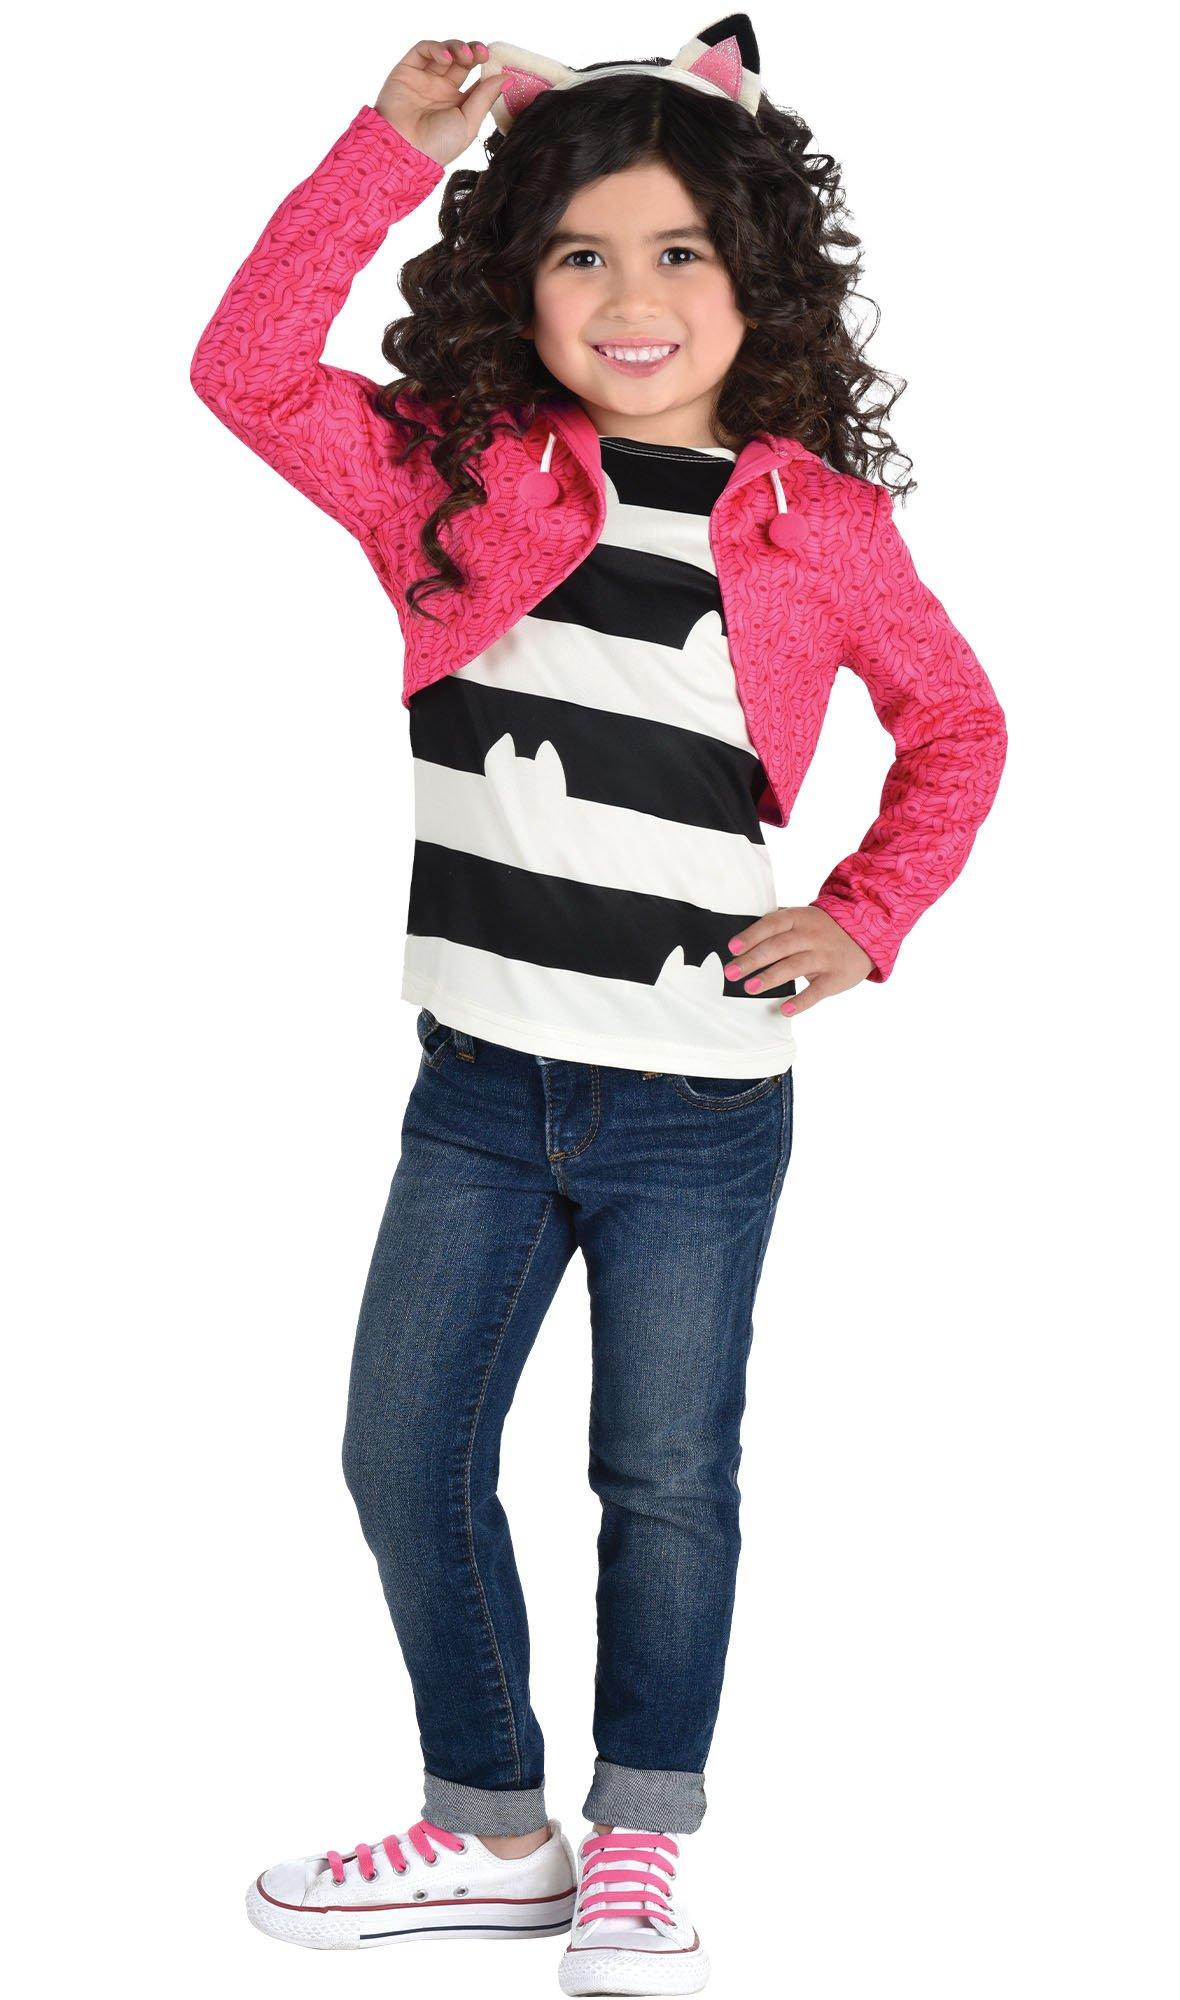 Gabby's Striped Shirt From Gabby's Dollhouse sizes 2T 7 Costume Birthday 